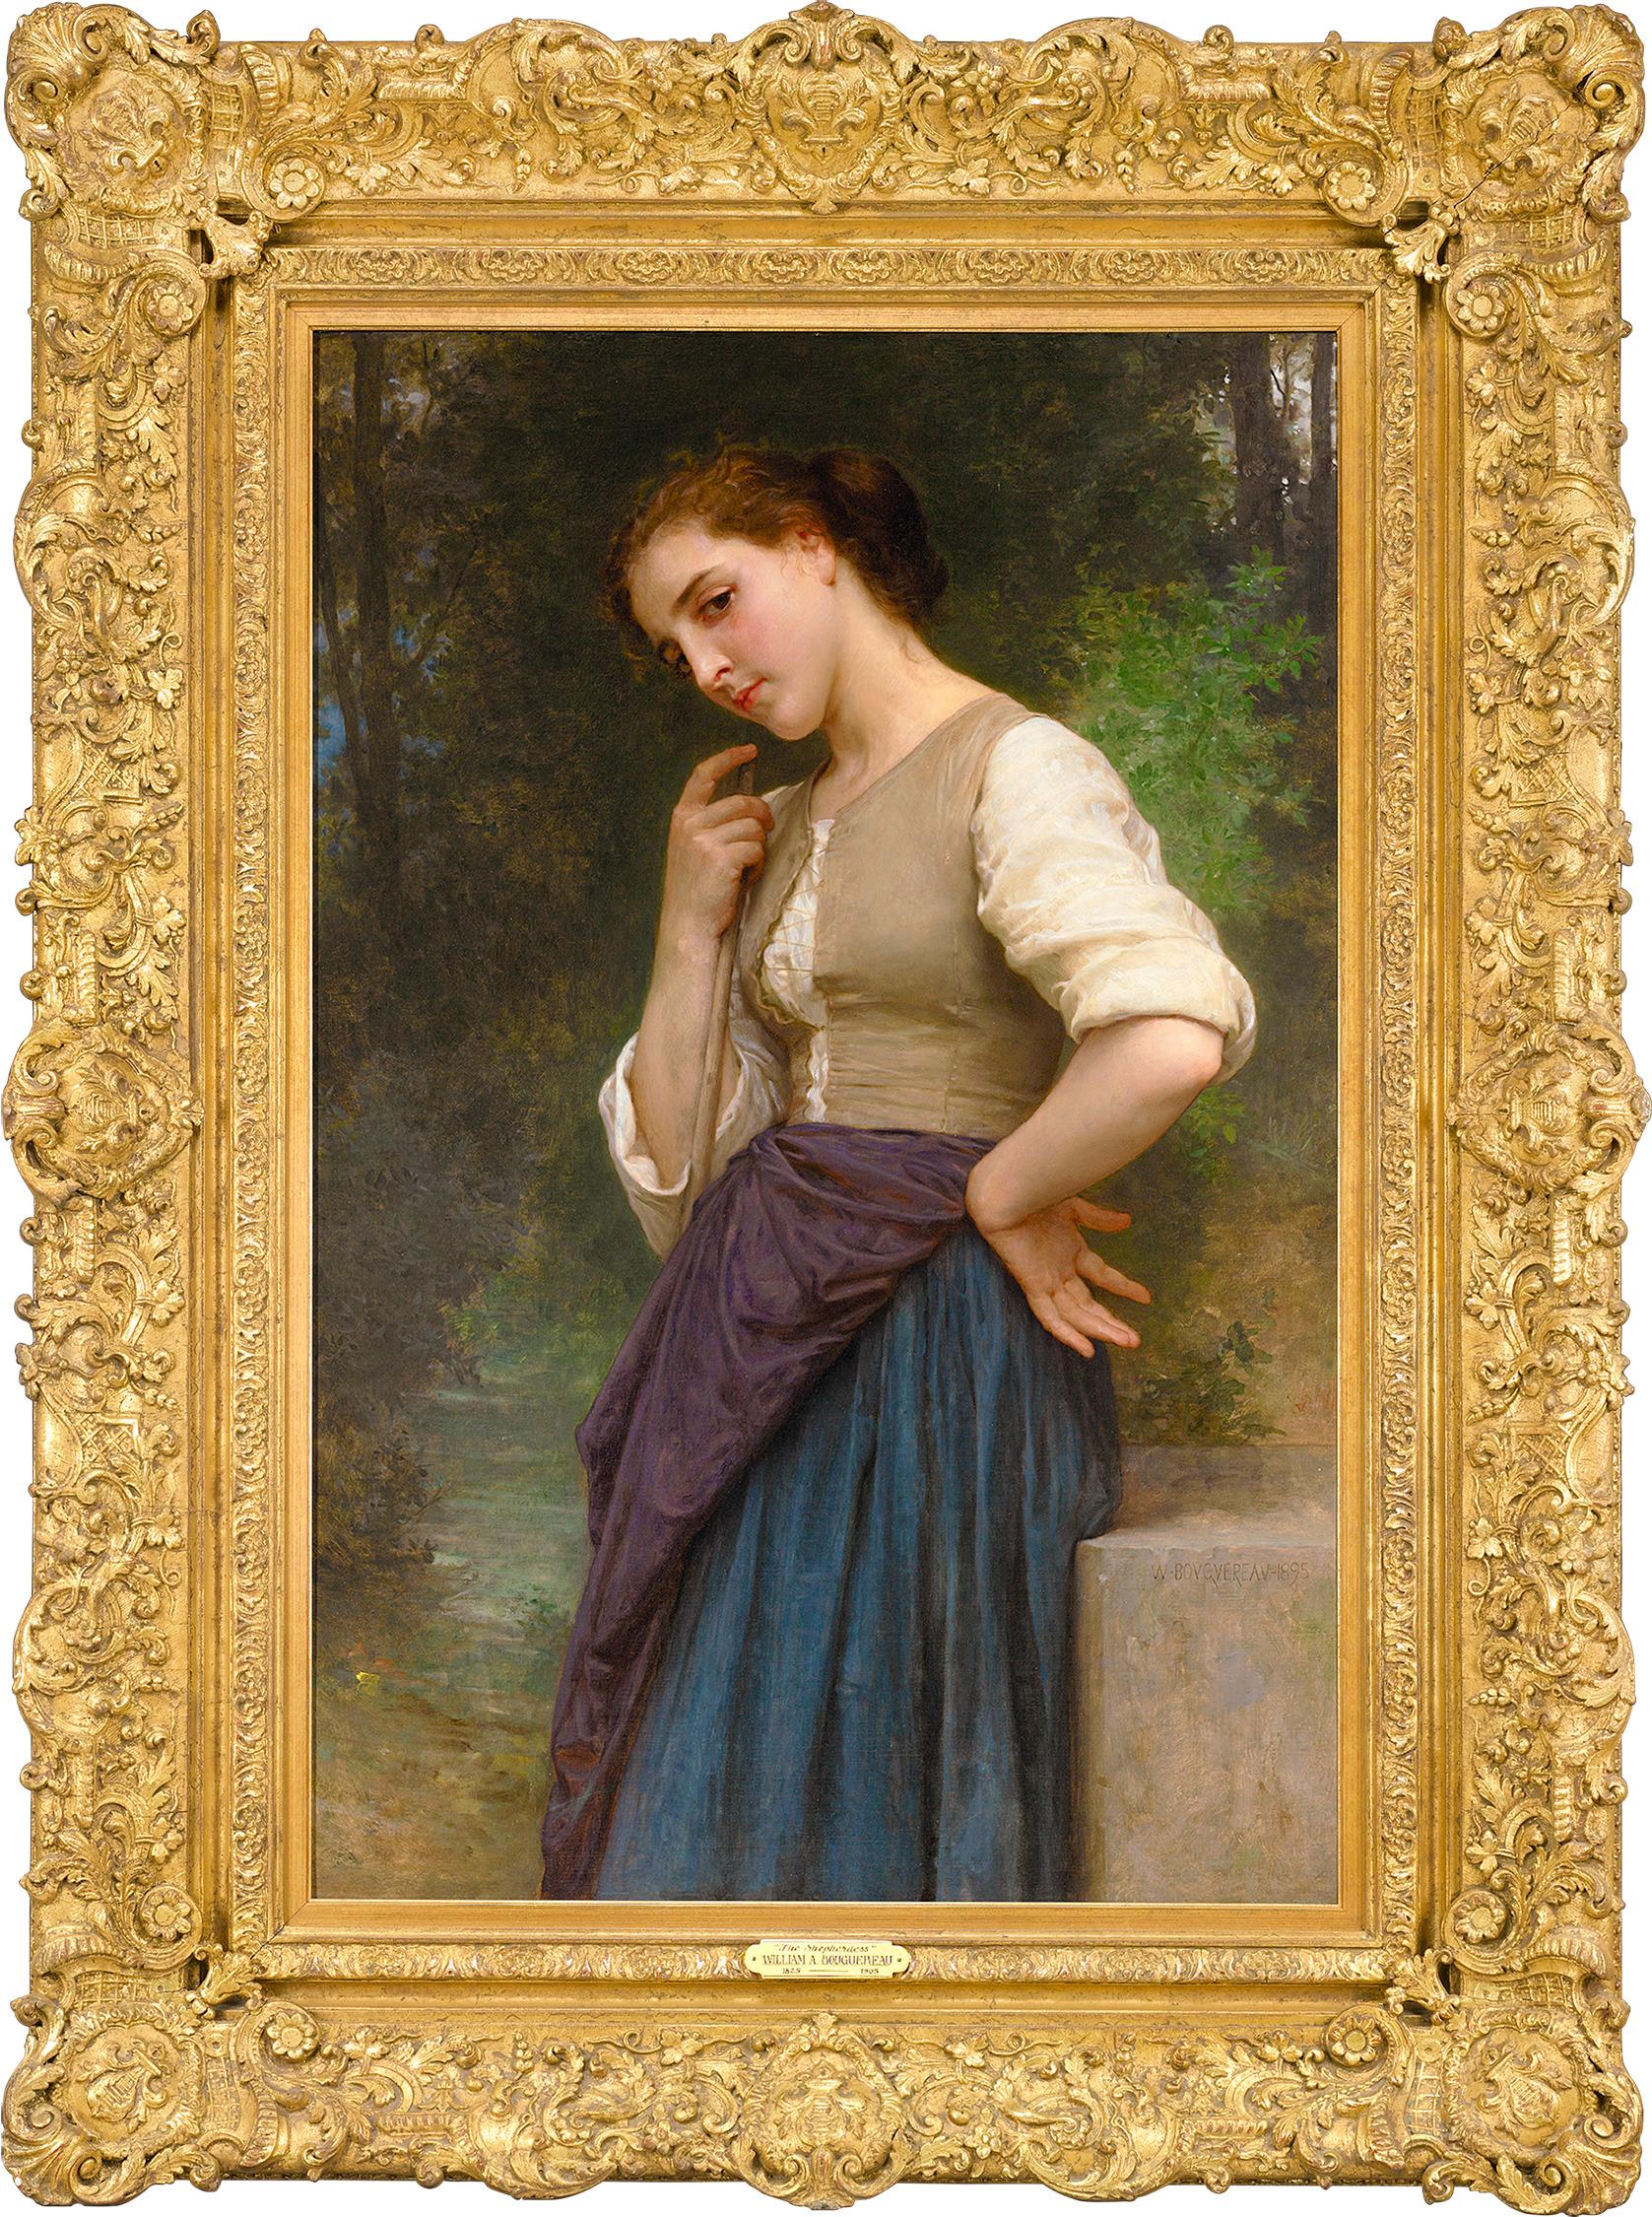 The Shepherdess - Painting by William-Adolphe Bouguereau